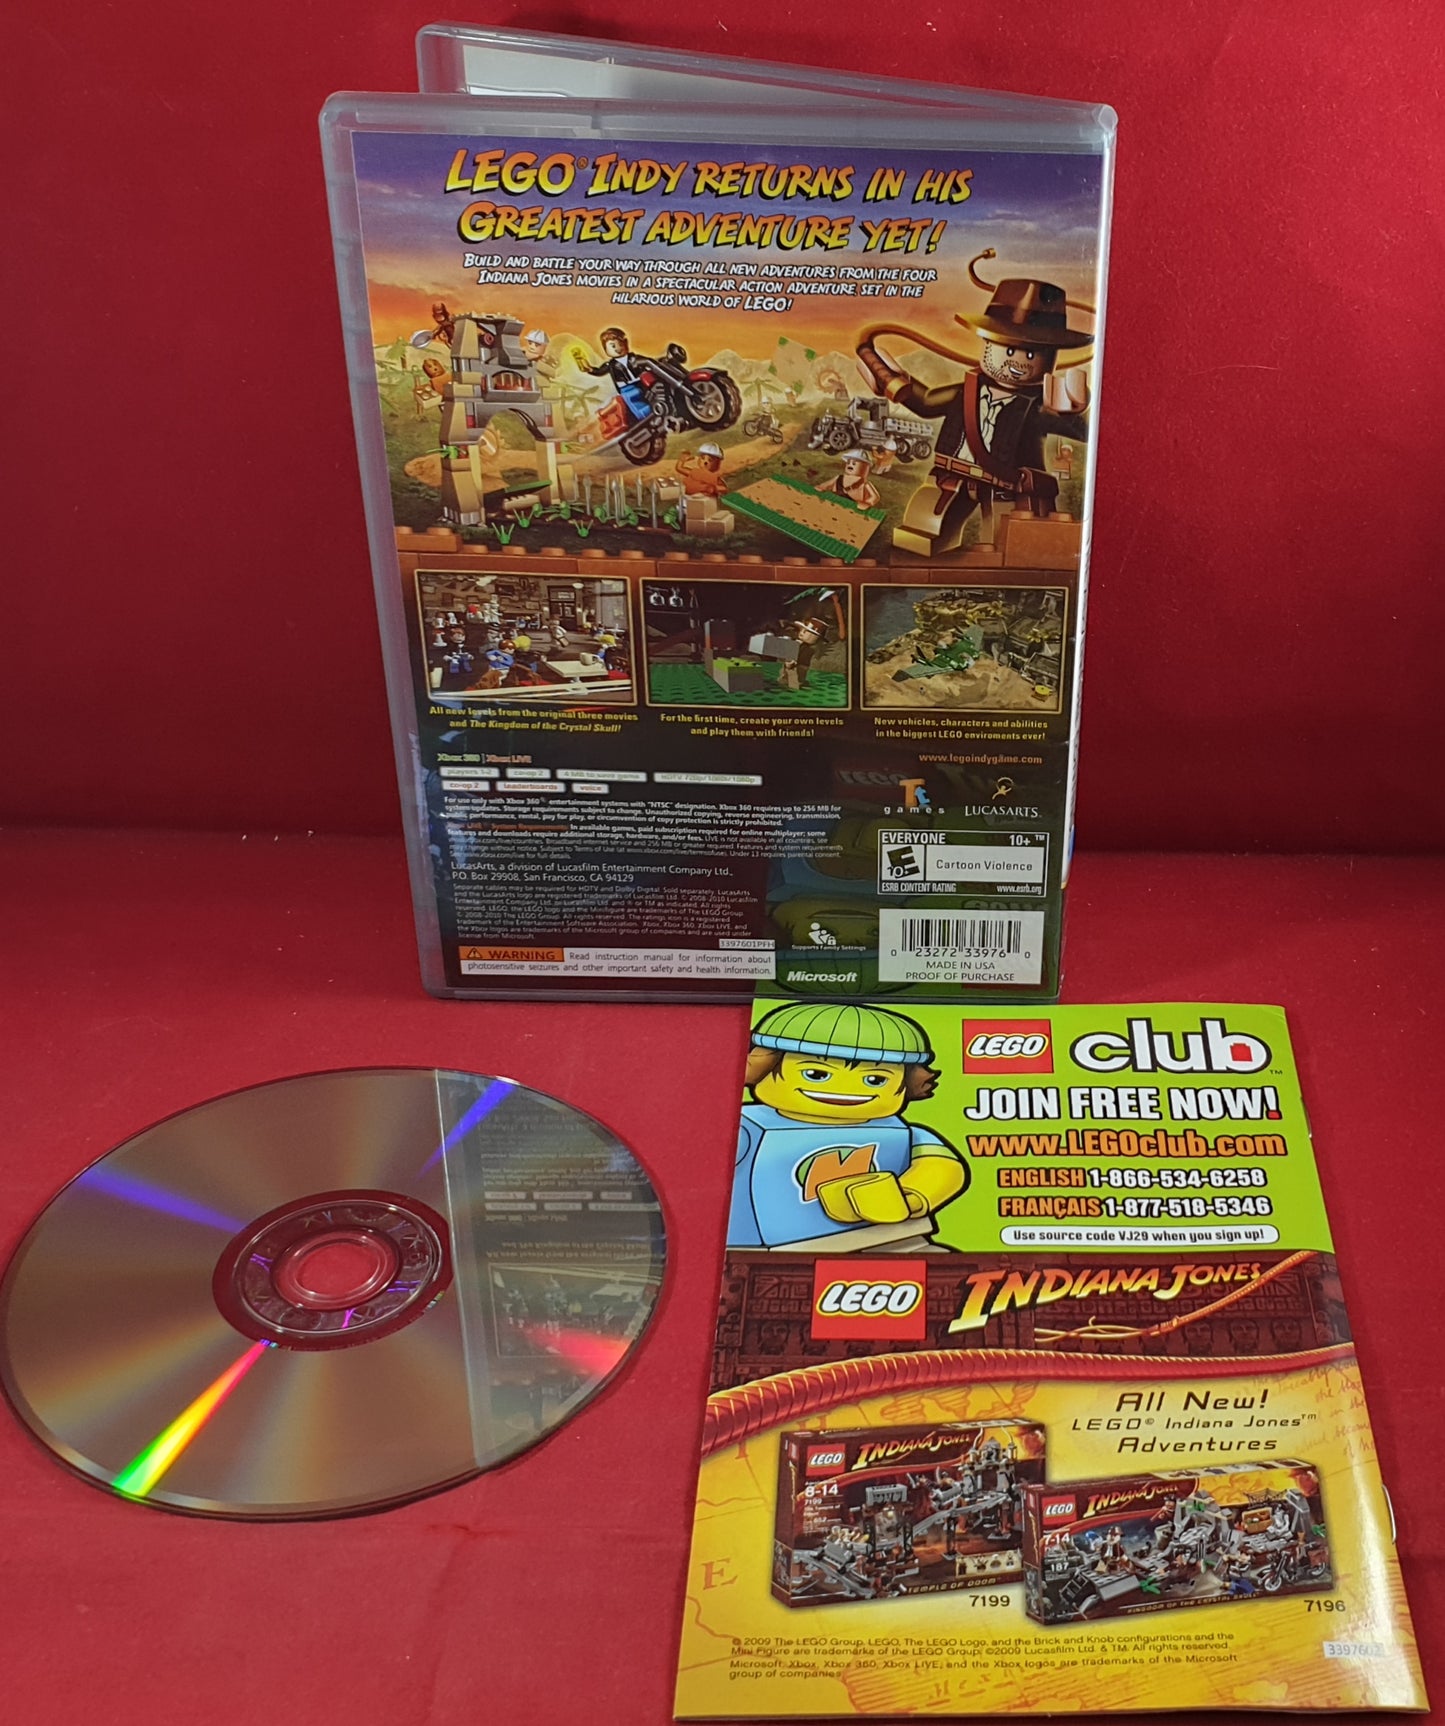 Lego Indiana Jones 2 the Adventure Continues Microsoft Xbox 360 Game NTSC